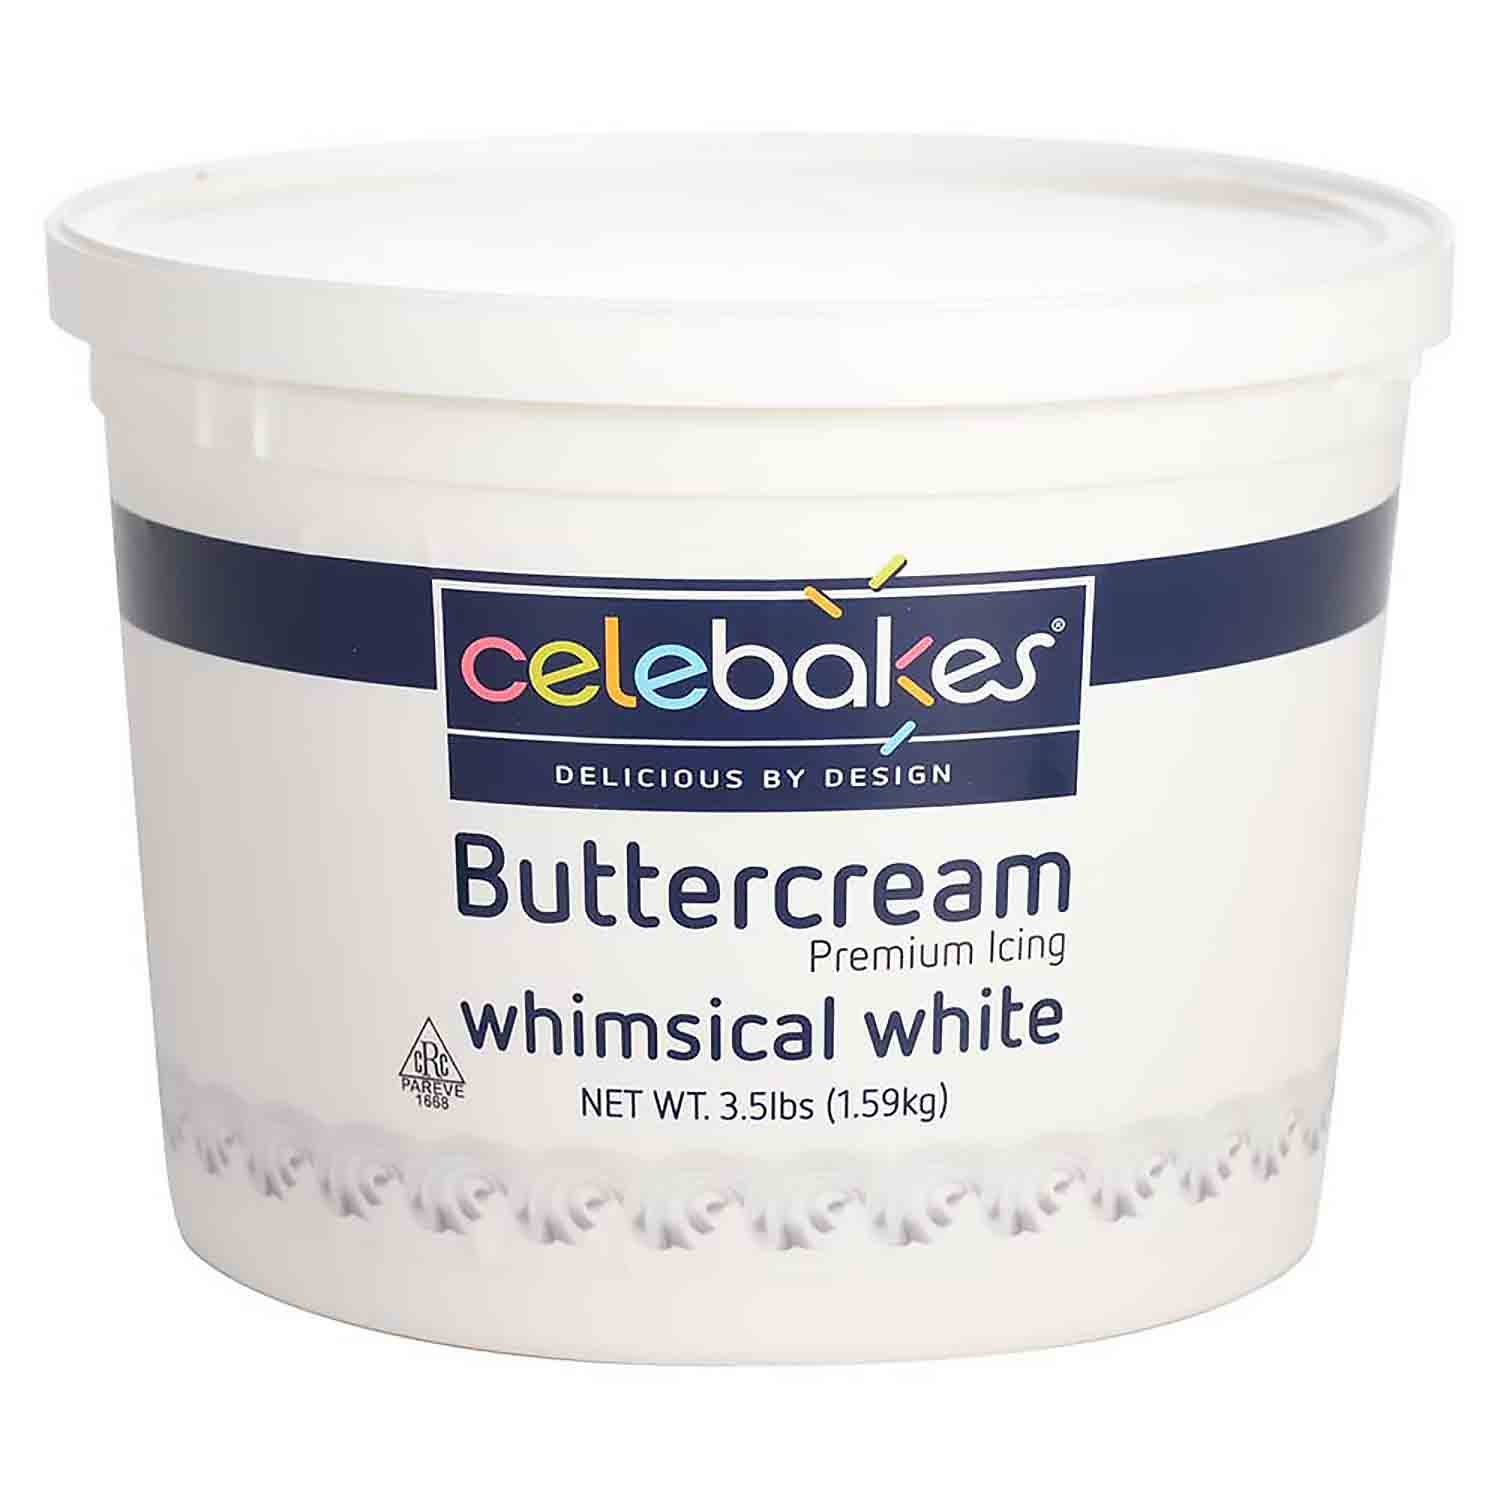 Celebakes Whimsical White Premium Buttercream Icing 3.5 Pounds